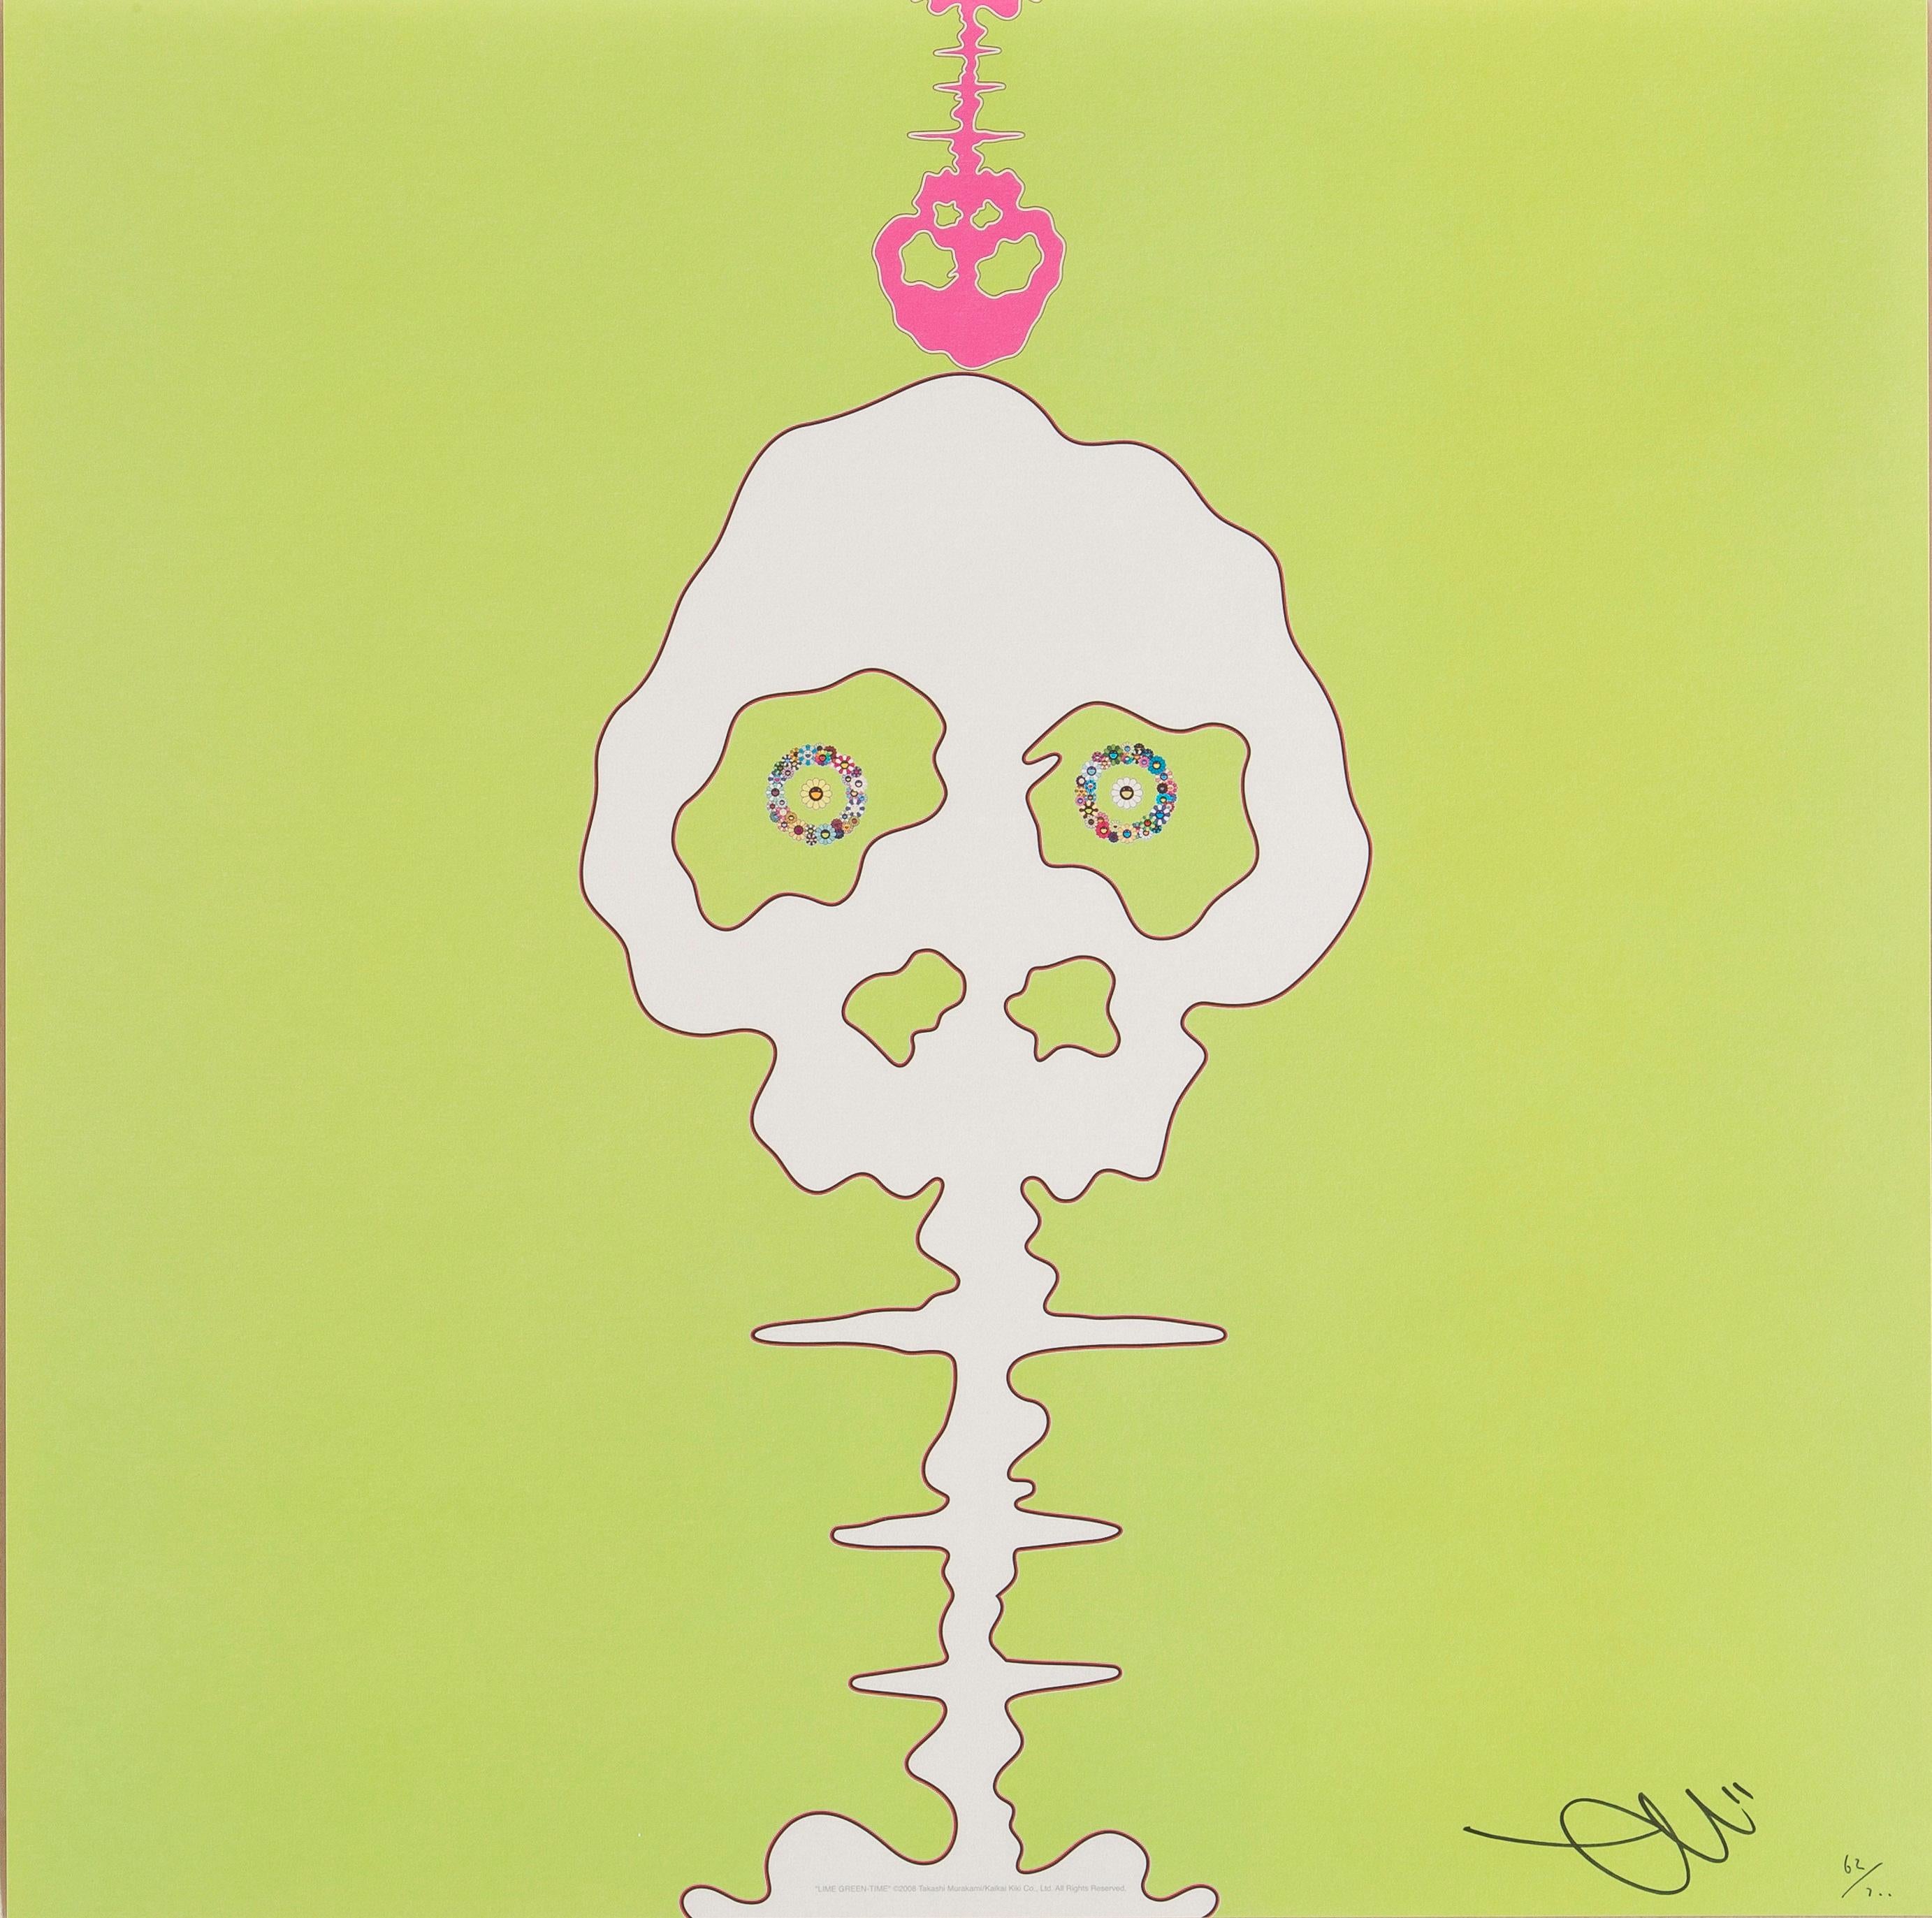 Takashi Murakami Figurative Print – Lime Green - Time (Time Bokan) 2011 Limitierte Auflage (Druck) von Murakami, signiert 